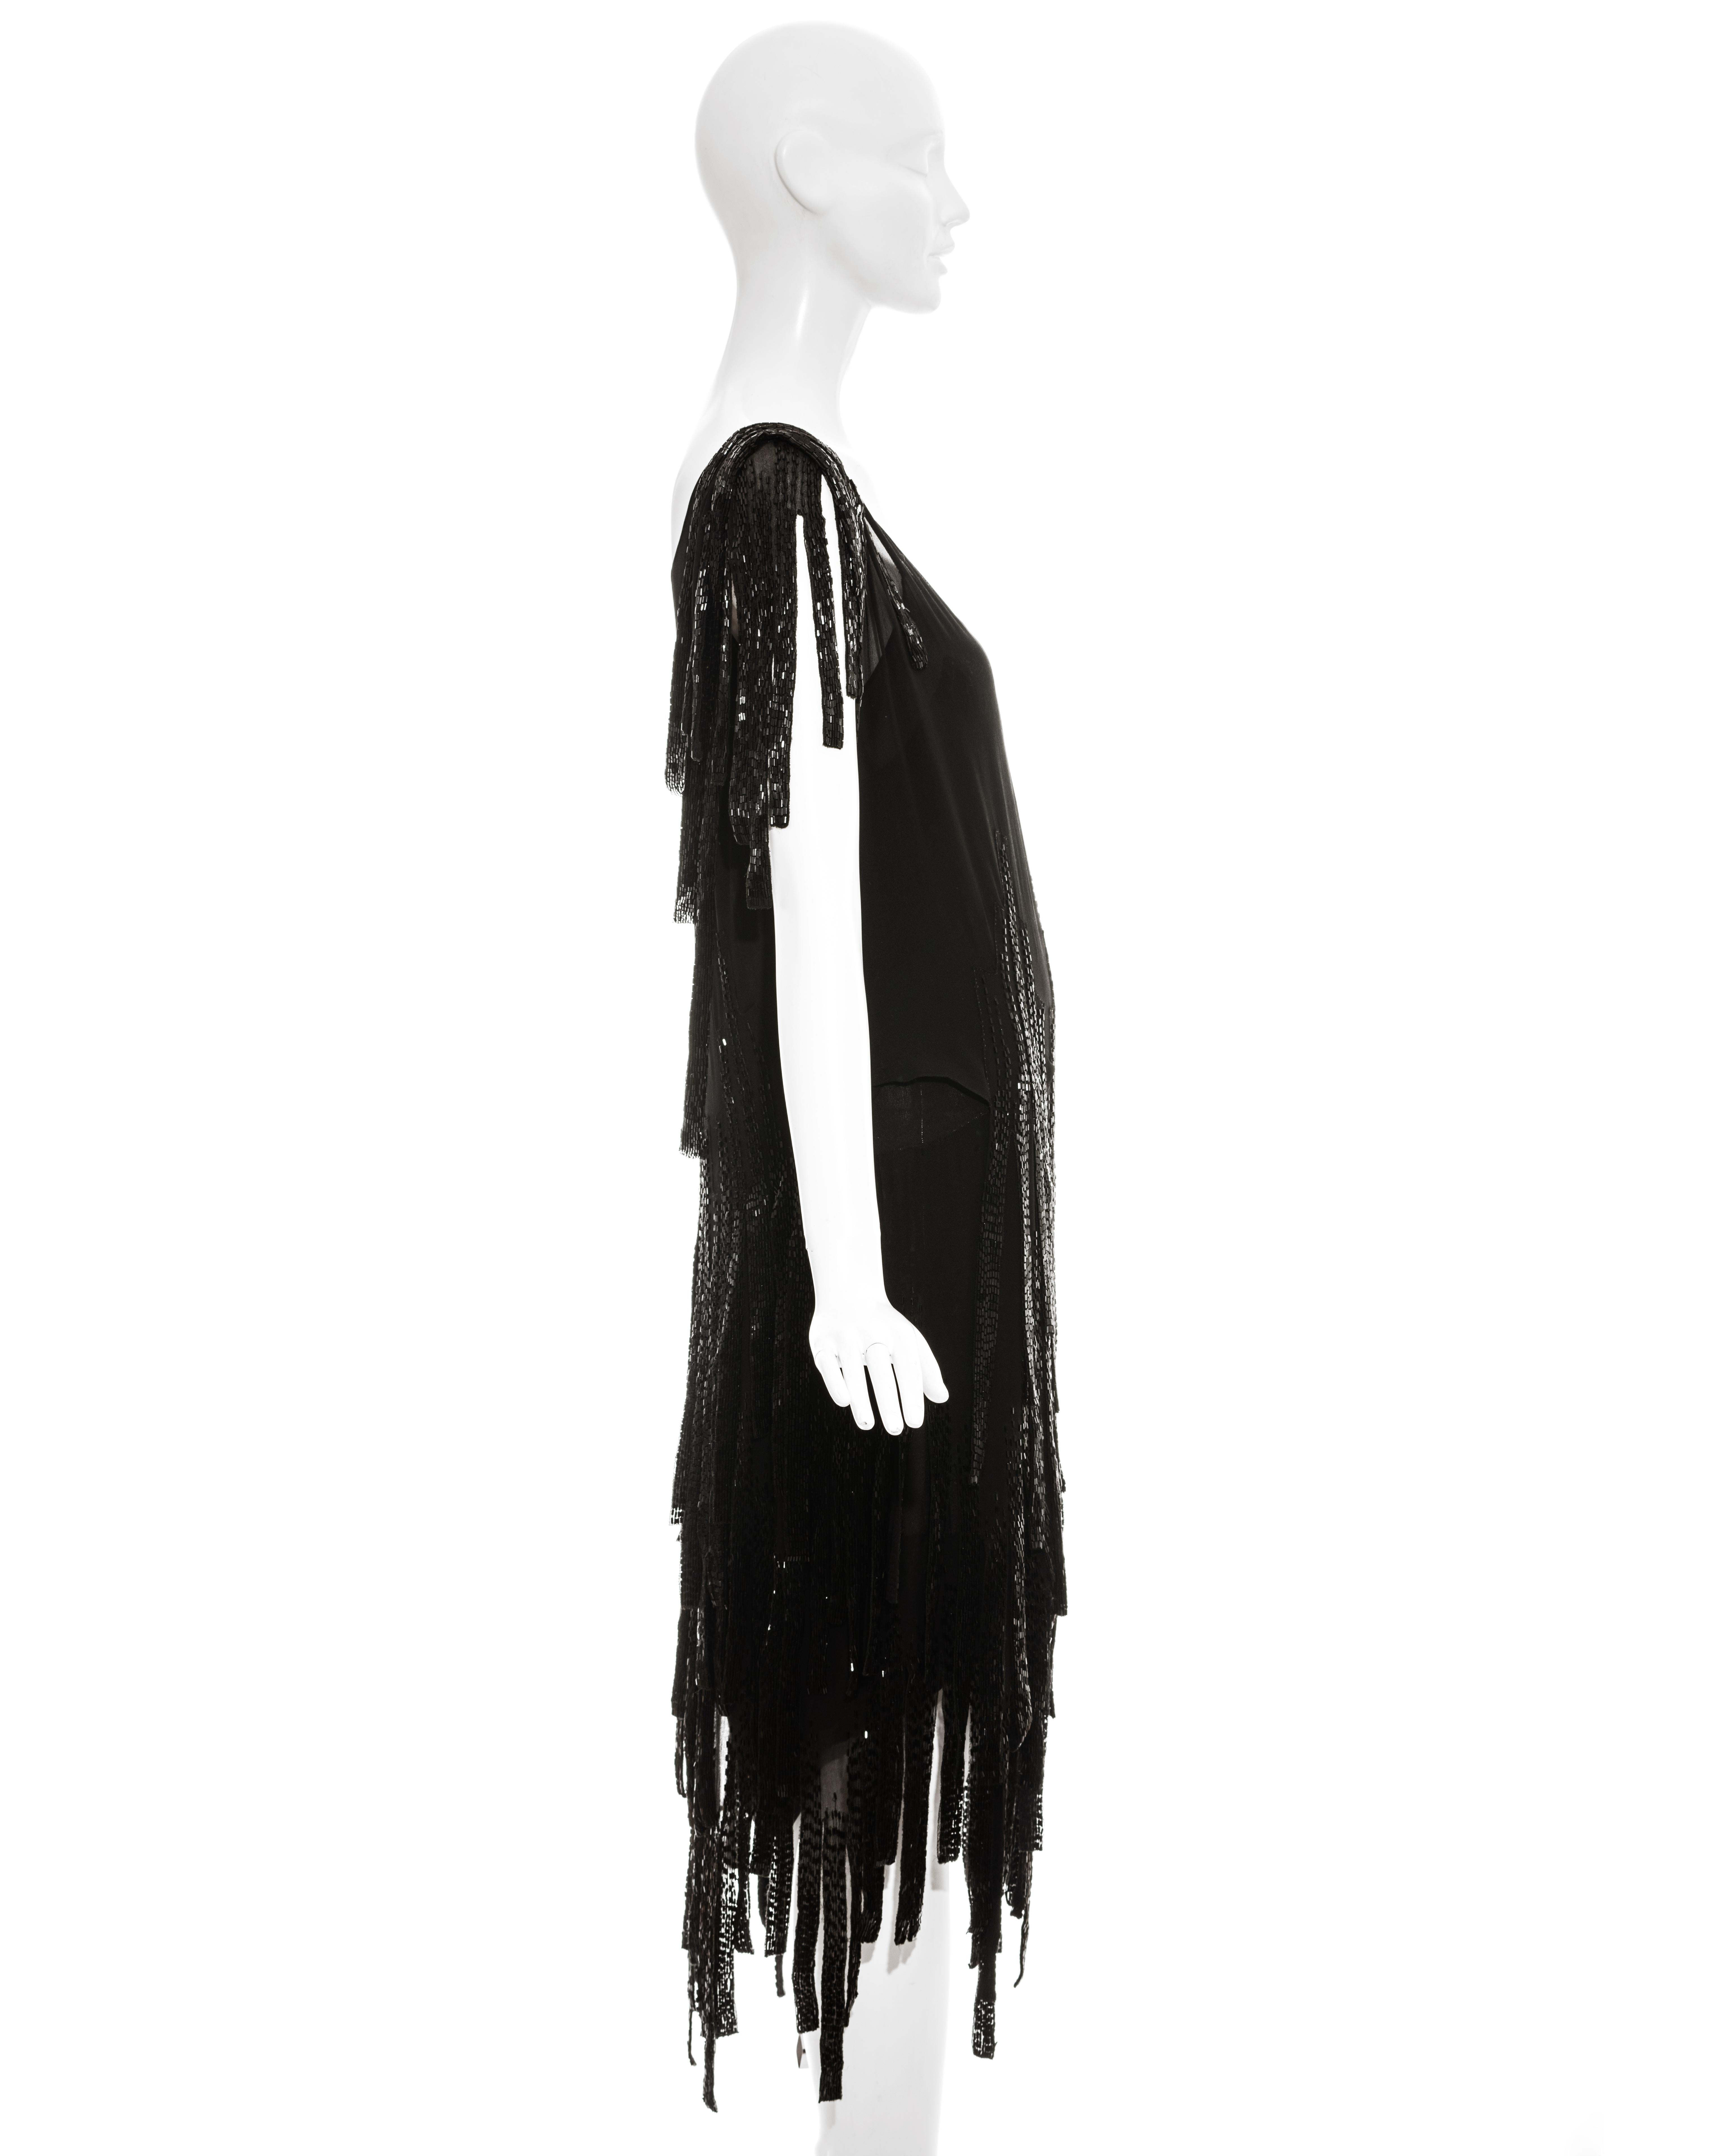 Black Gabrielle Chanel couture black silk beaded flapper dress, c. 1924 - 1926